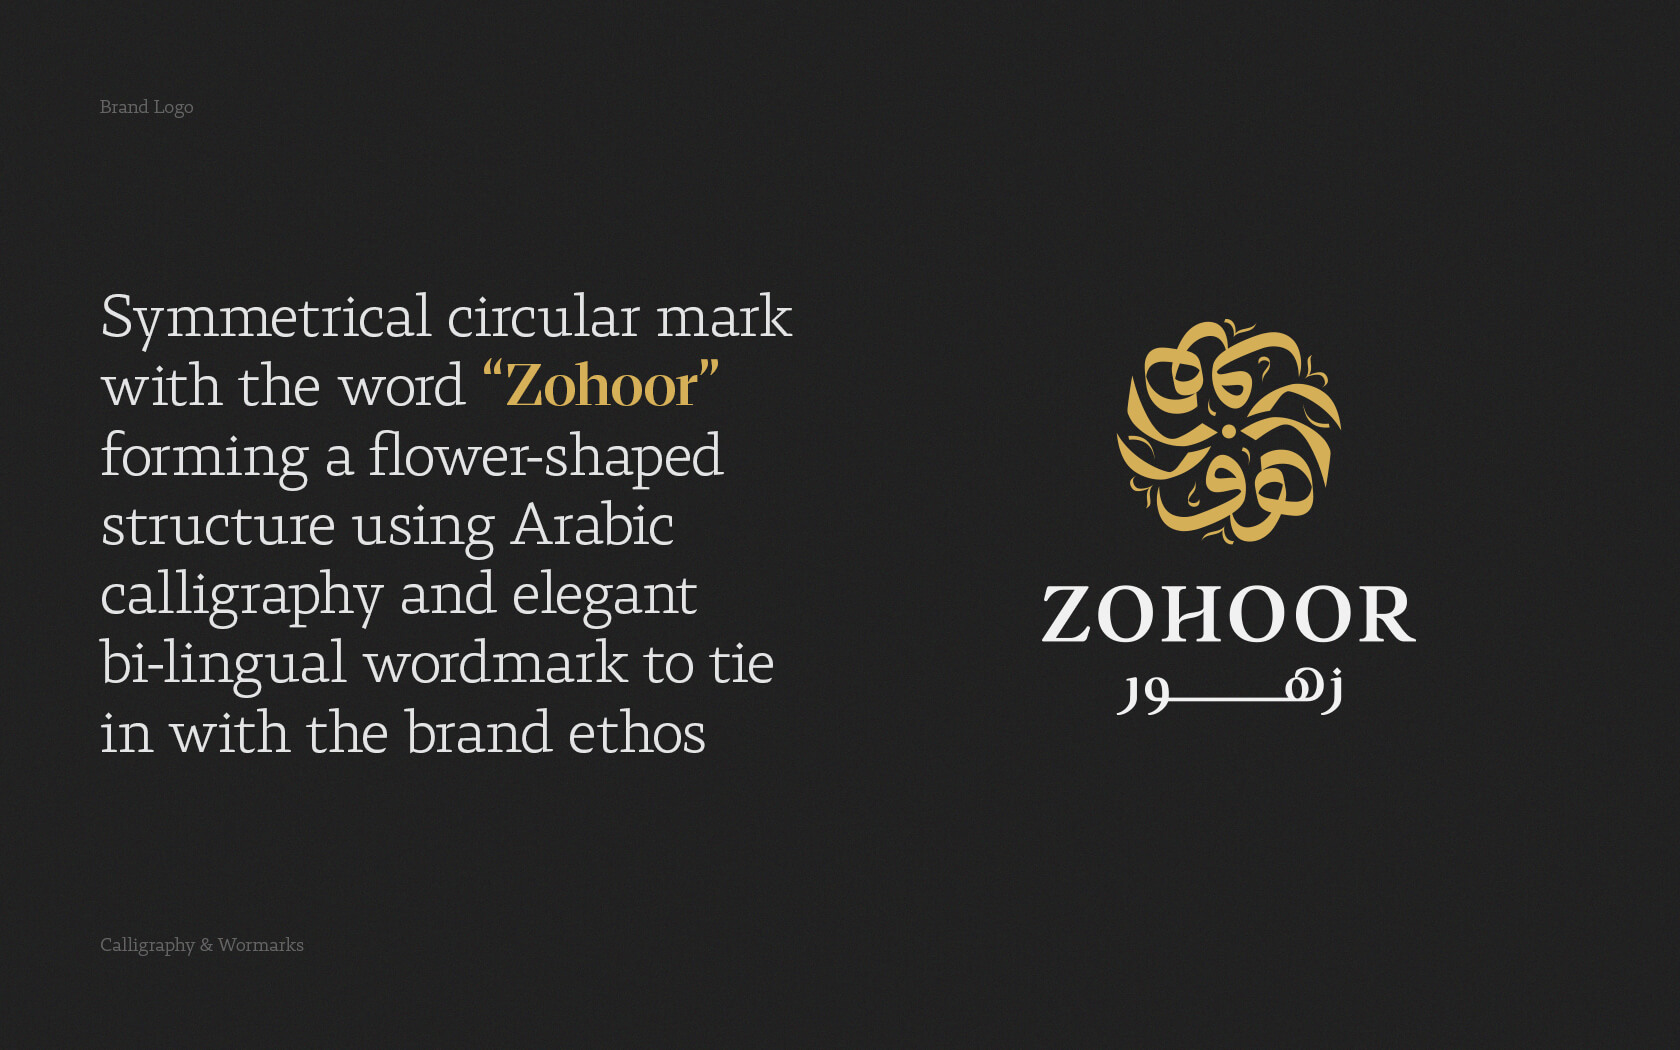 Zohoor. Brand logo explanation